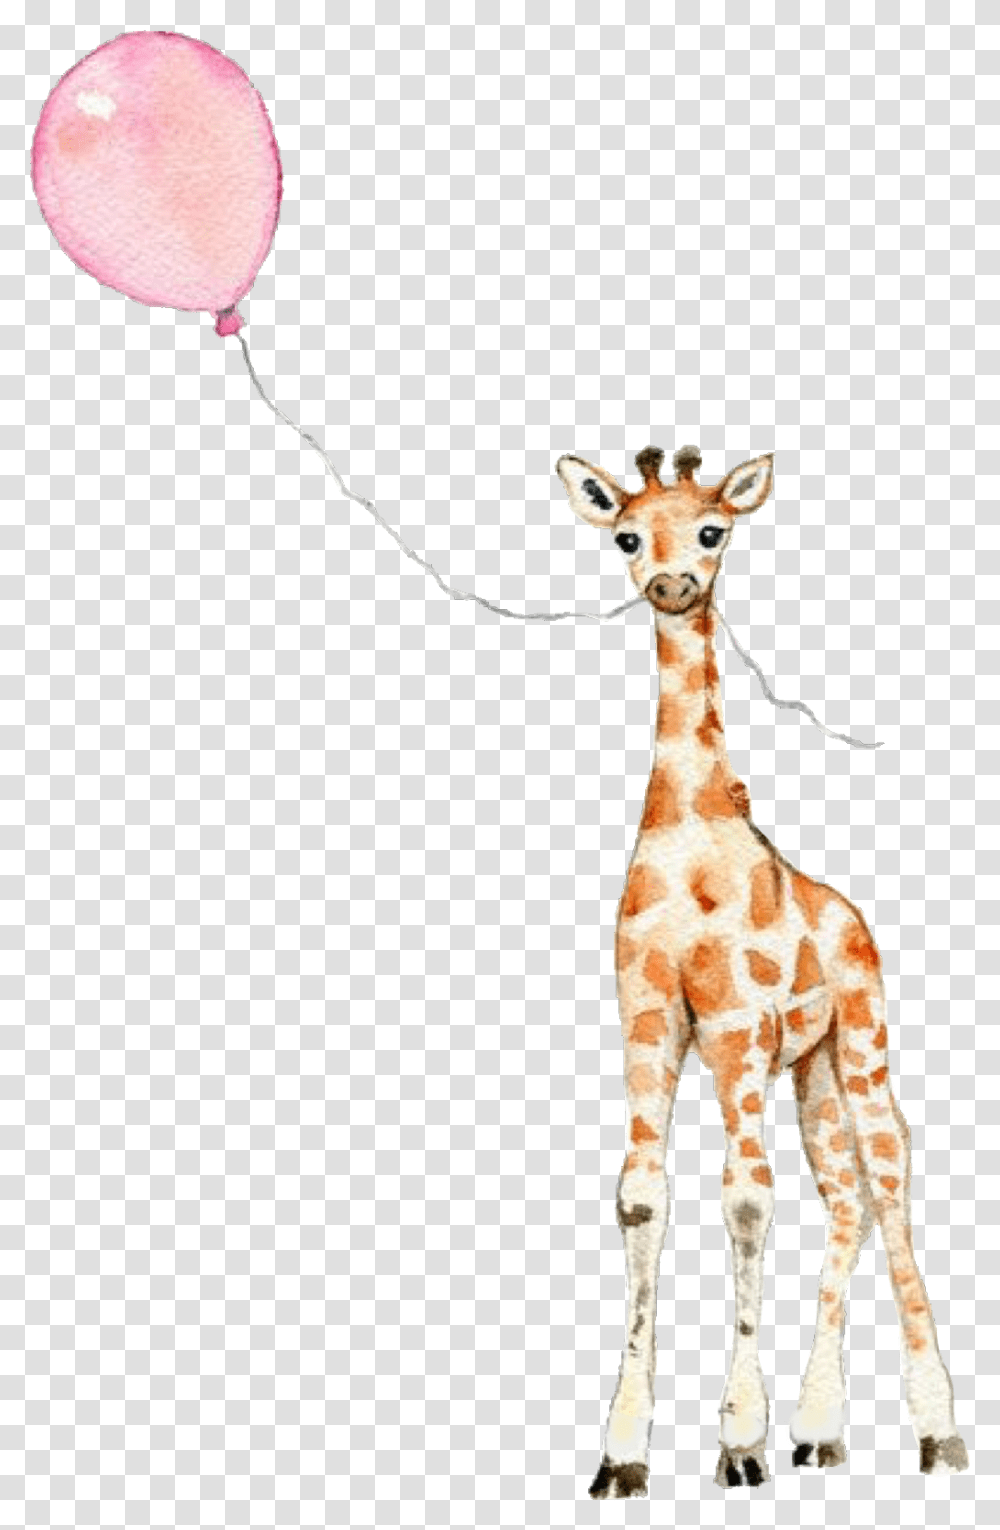 Cute Adorable Giraffe Balloon Scgiraffe Giraffe With Balloon Painting, Wildlife, Mammal, Animal, Toy Transparent Png